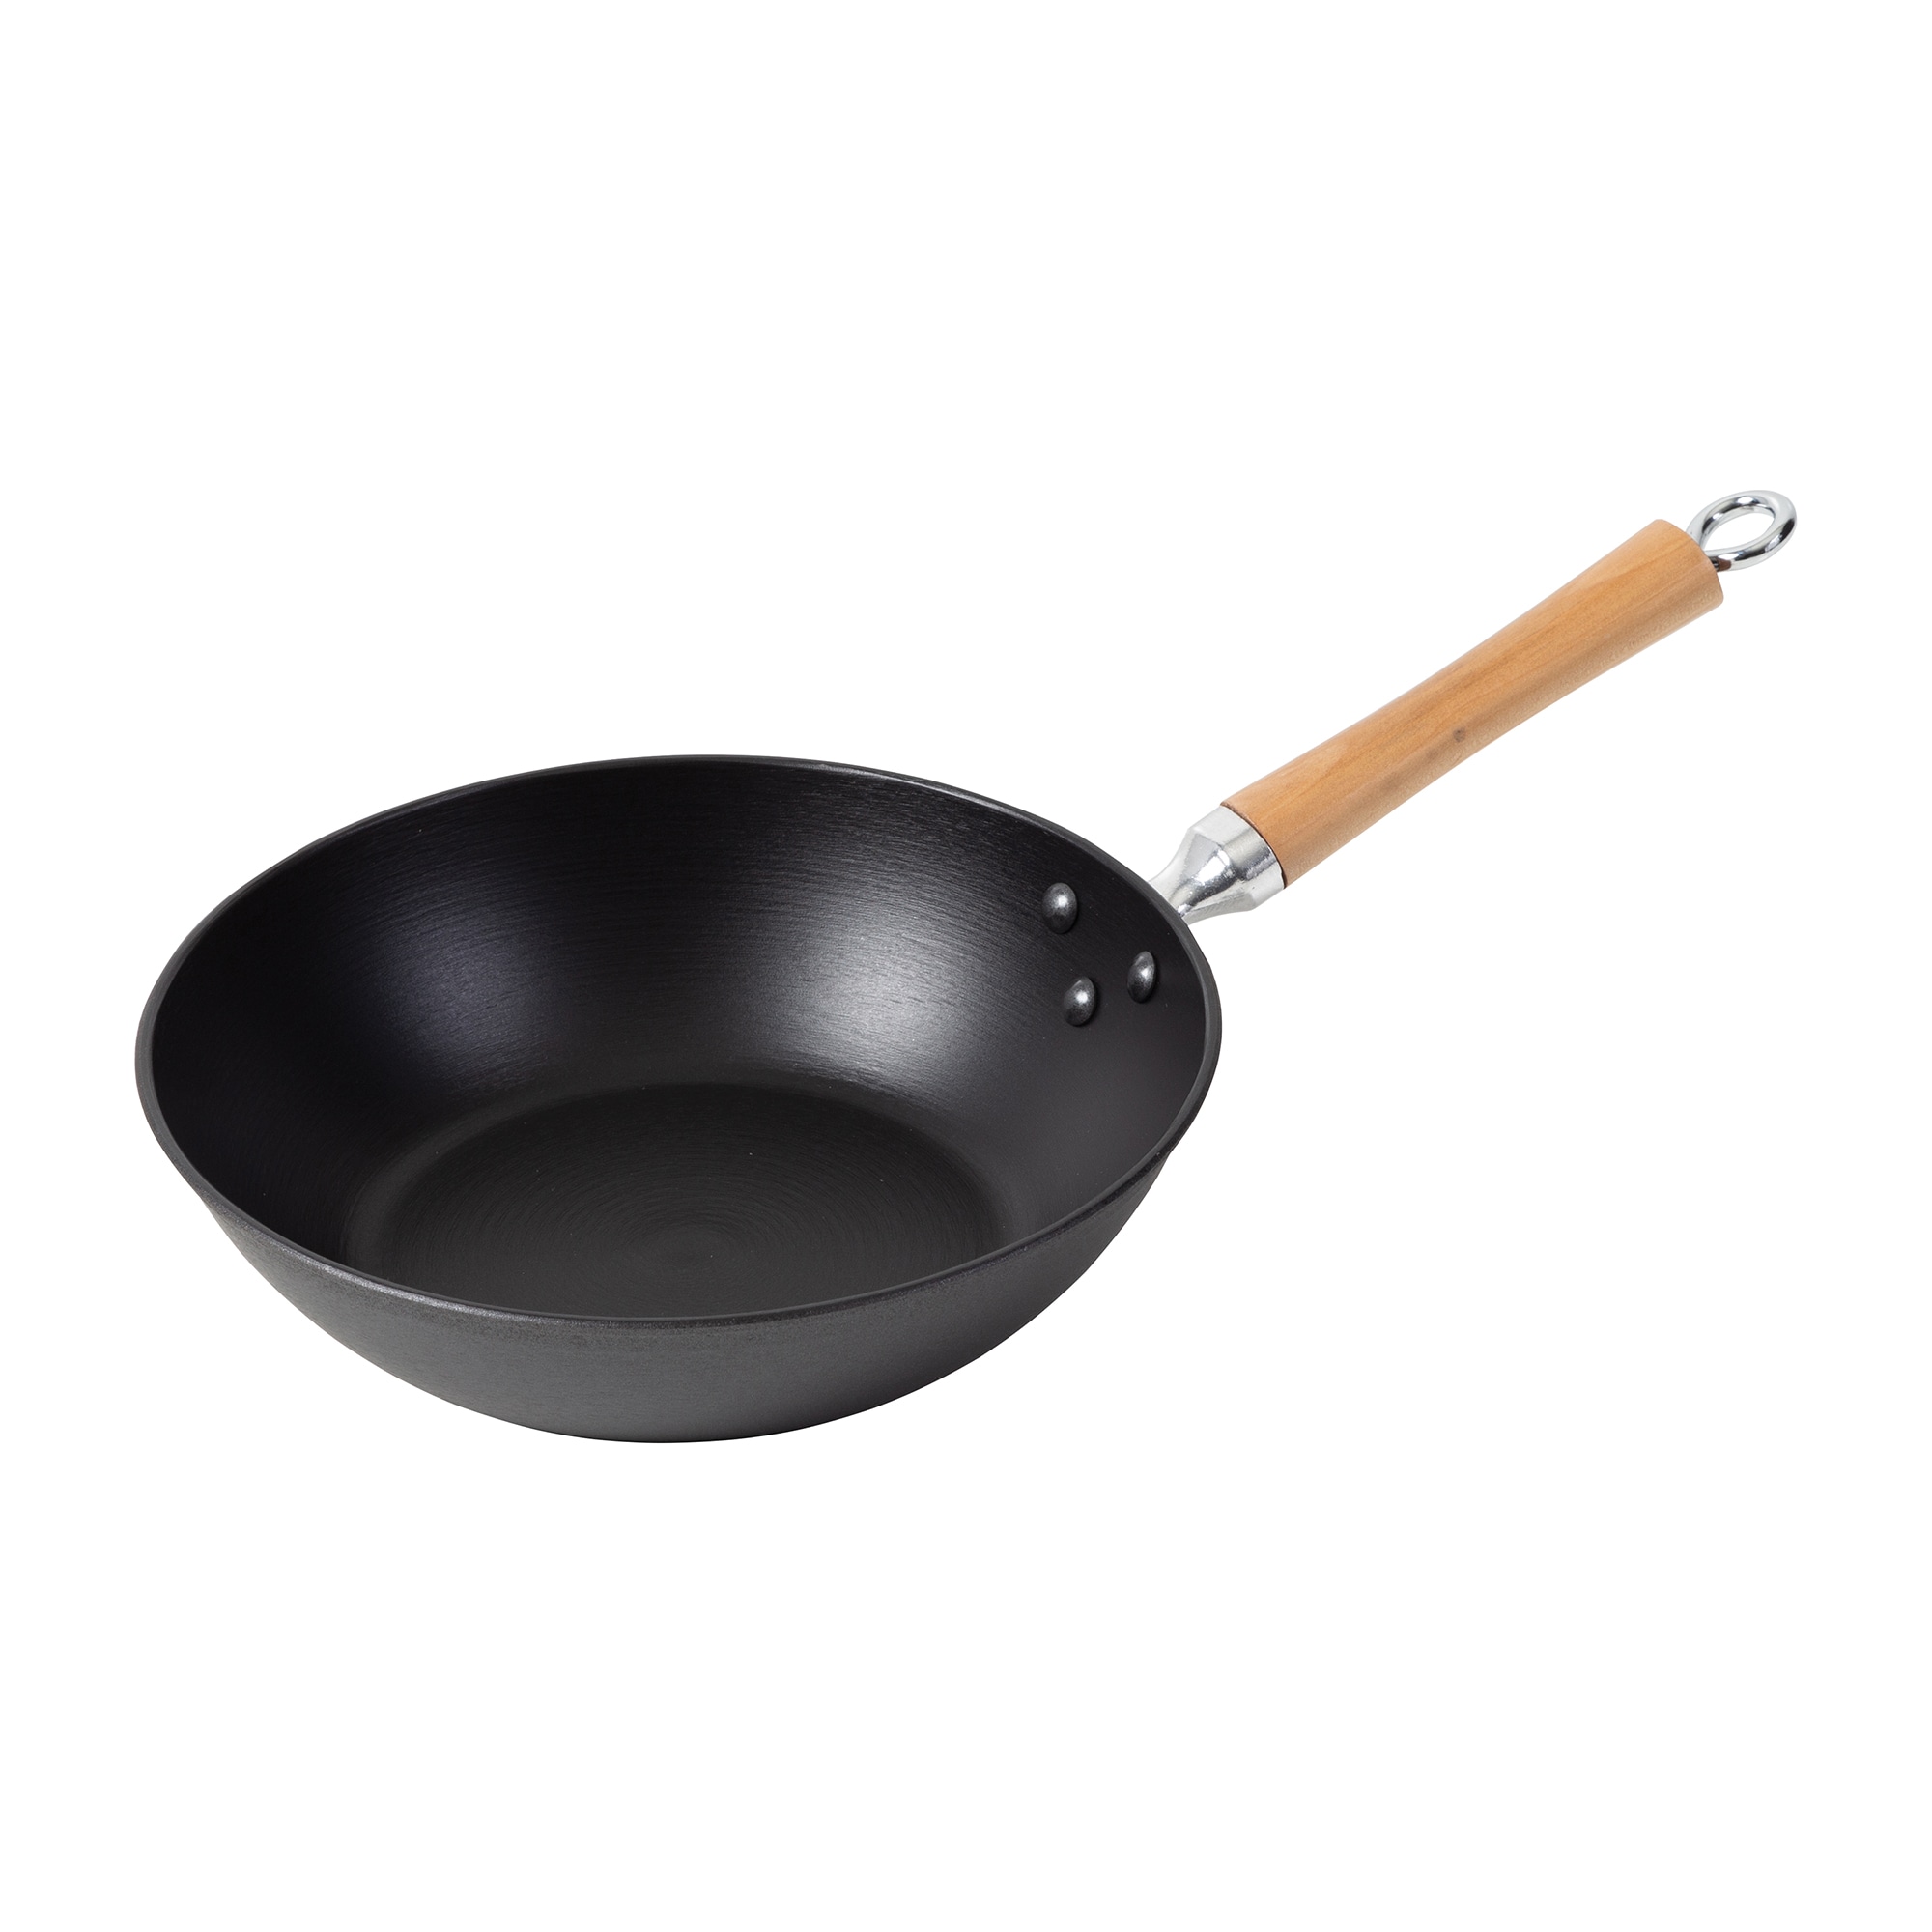  T-fal Specialty Nonstick Woks & Stir-Fry Pan 14 Inch